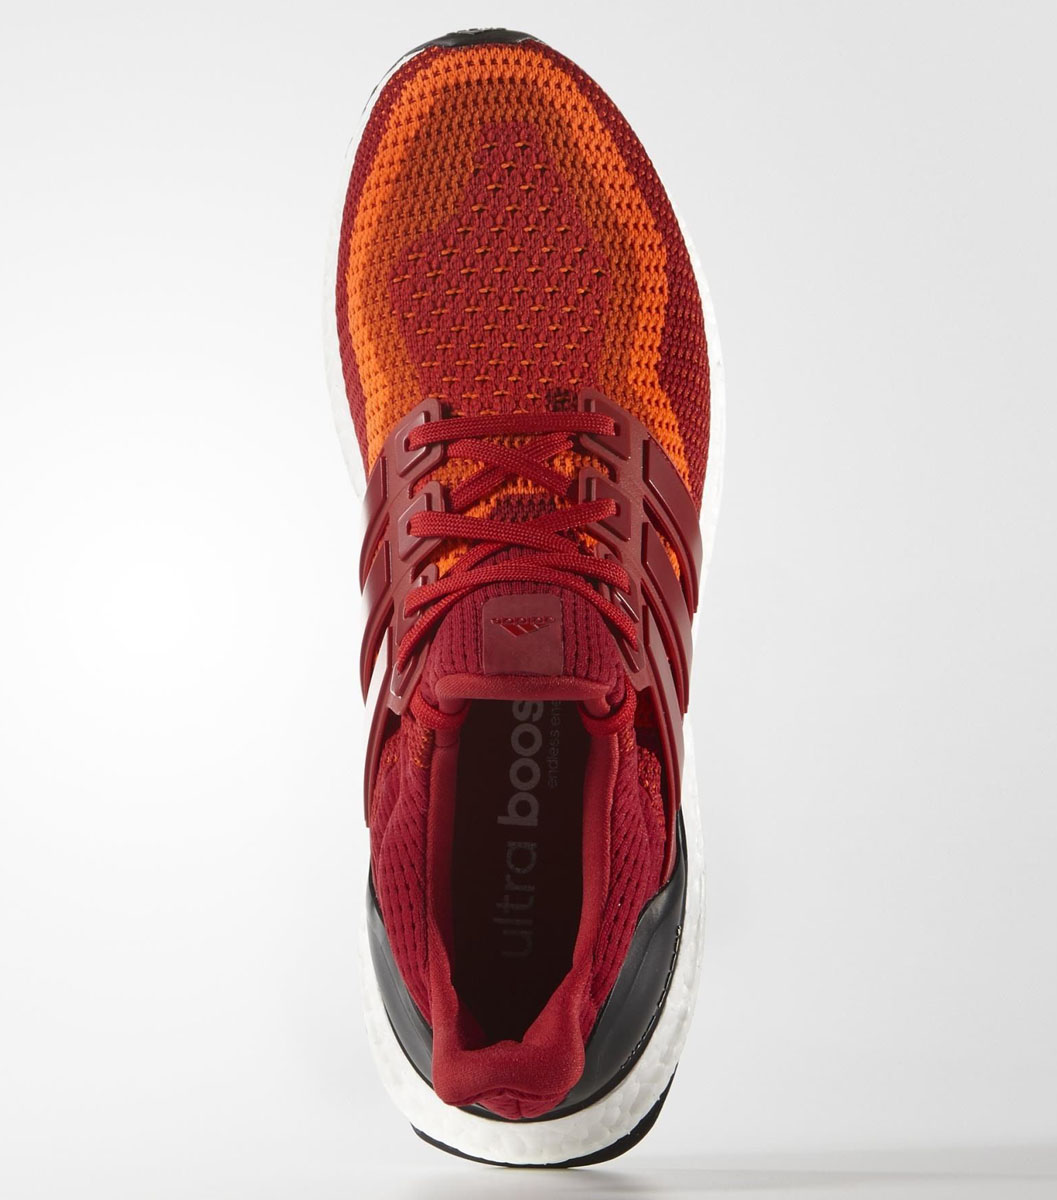 adidas-ultra-boost-red-orange-wave-2